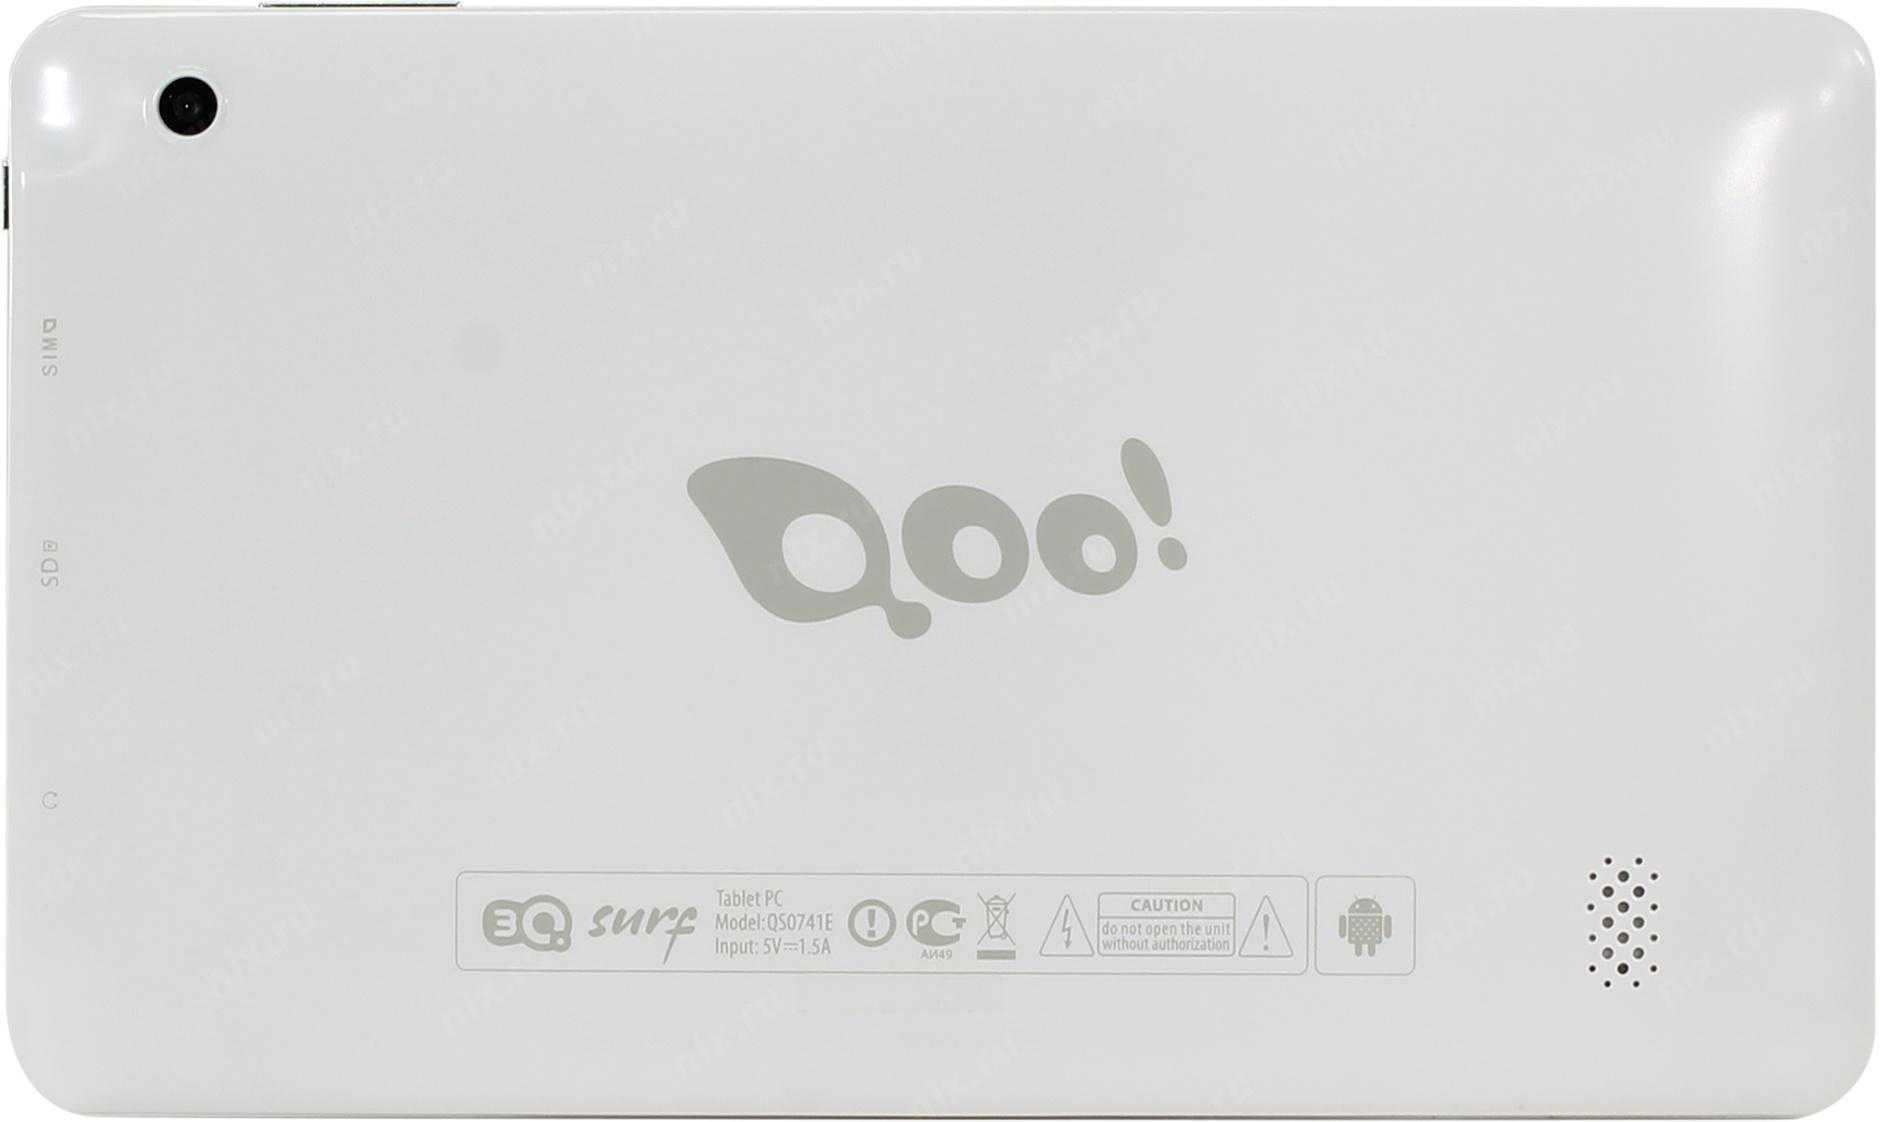 3q qoo surf tablet pc ts1005b 1gb ram 16gb emmc - купить , скидки, цена, отзывы, обзор, характеристики - планшеты